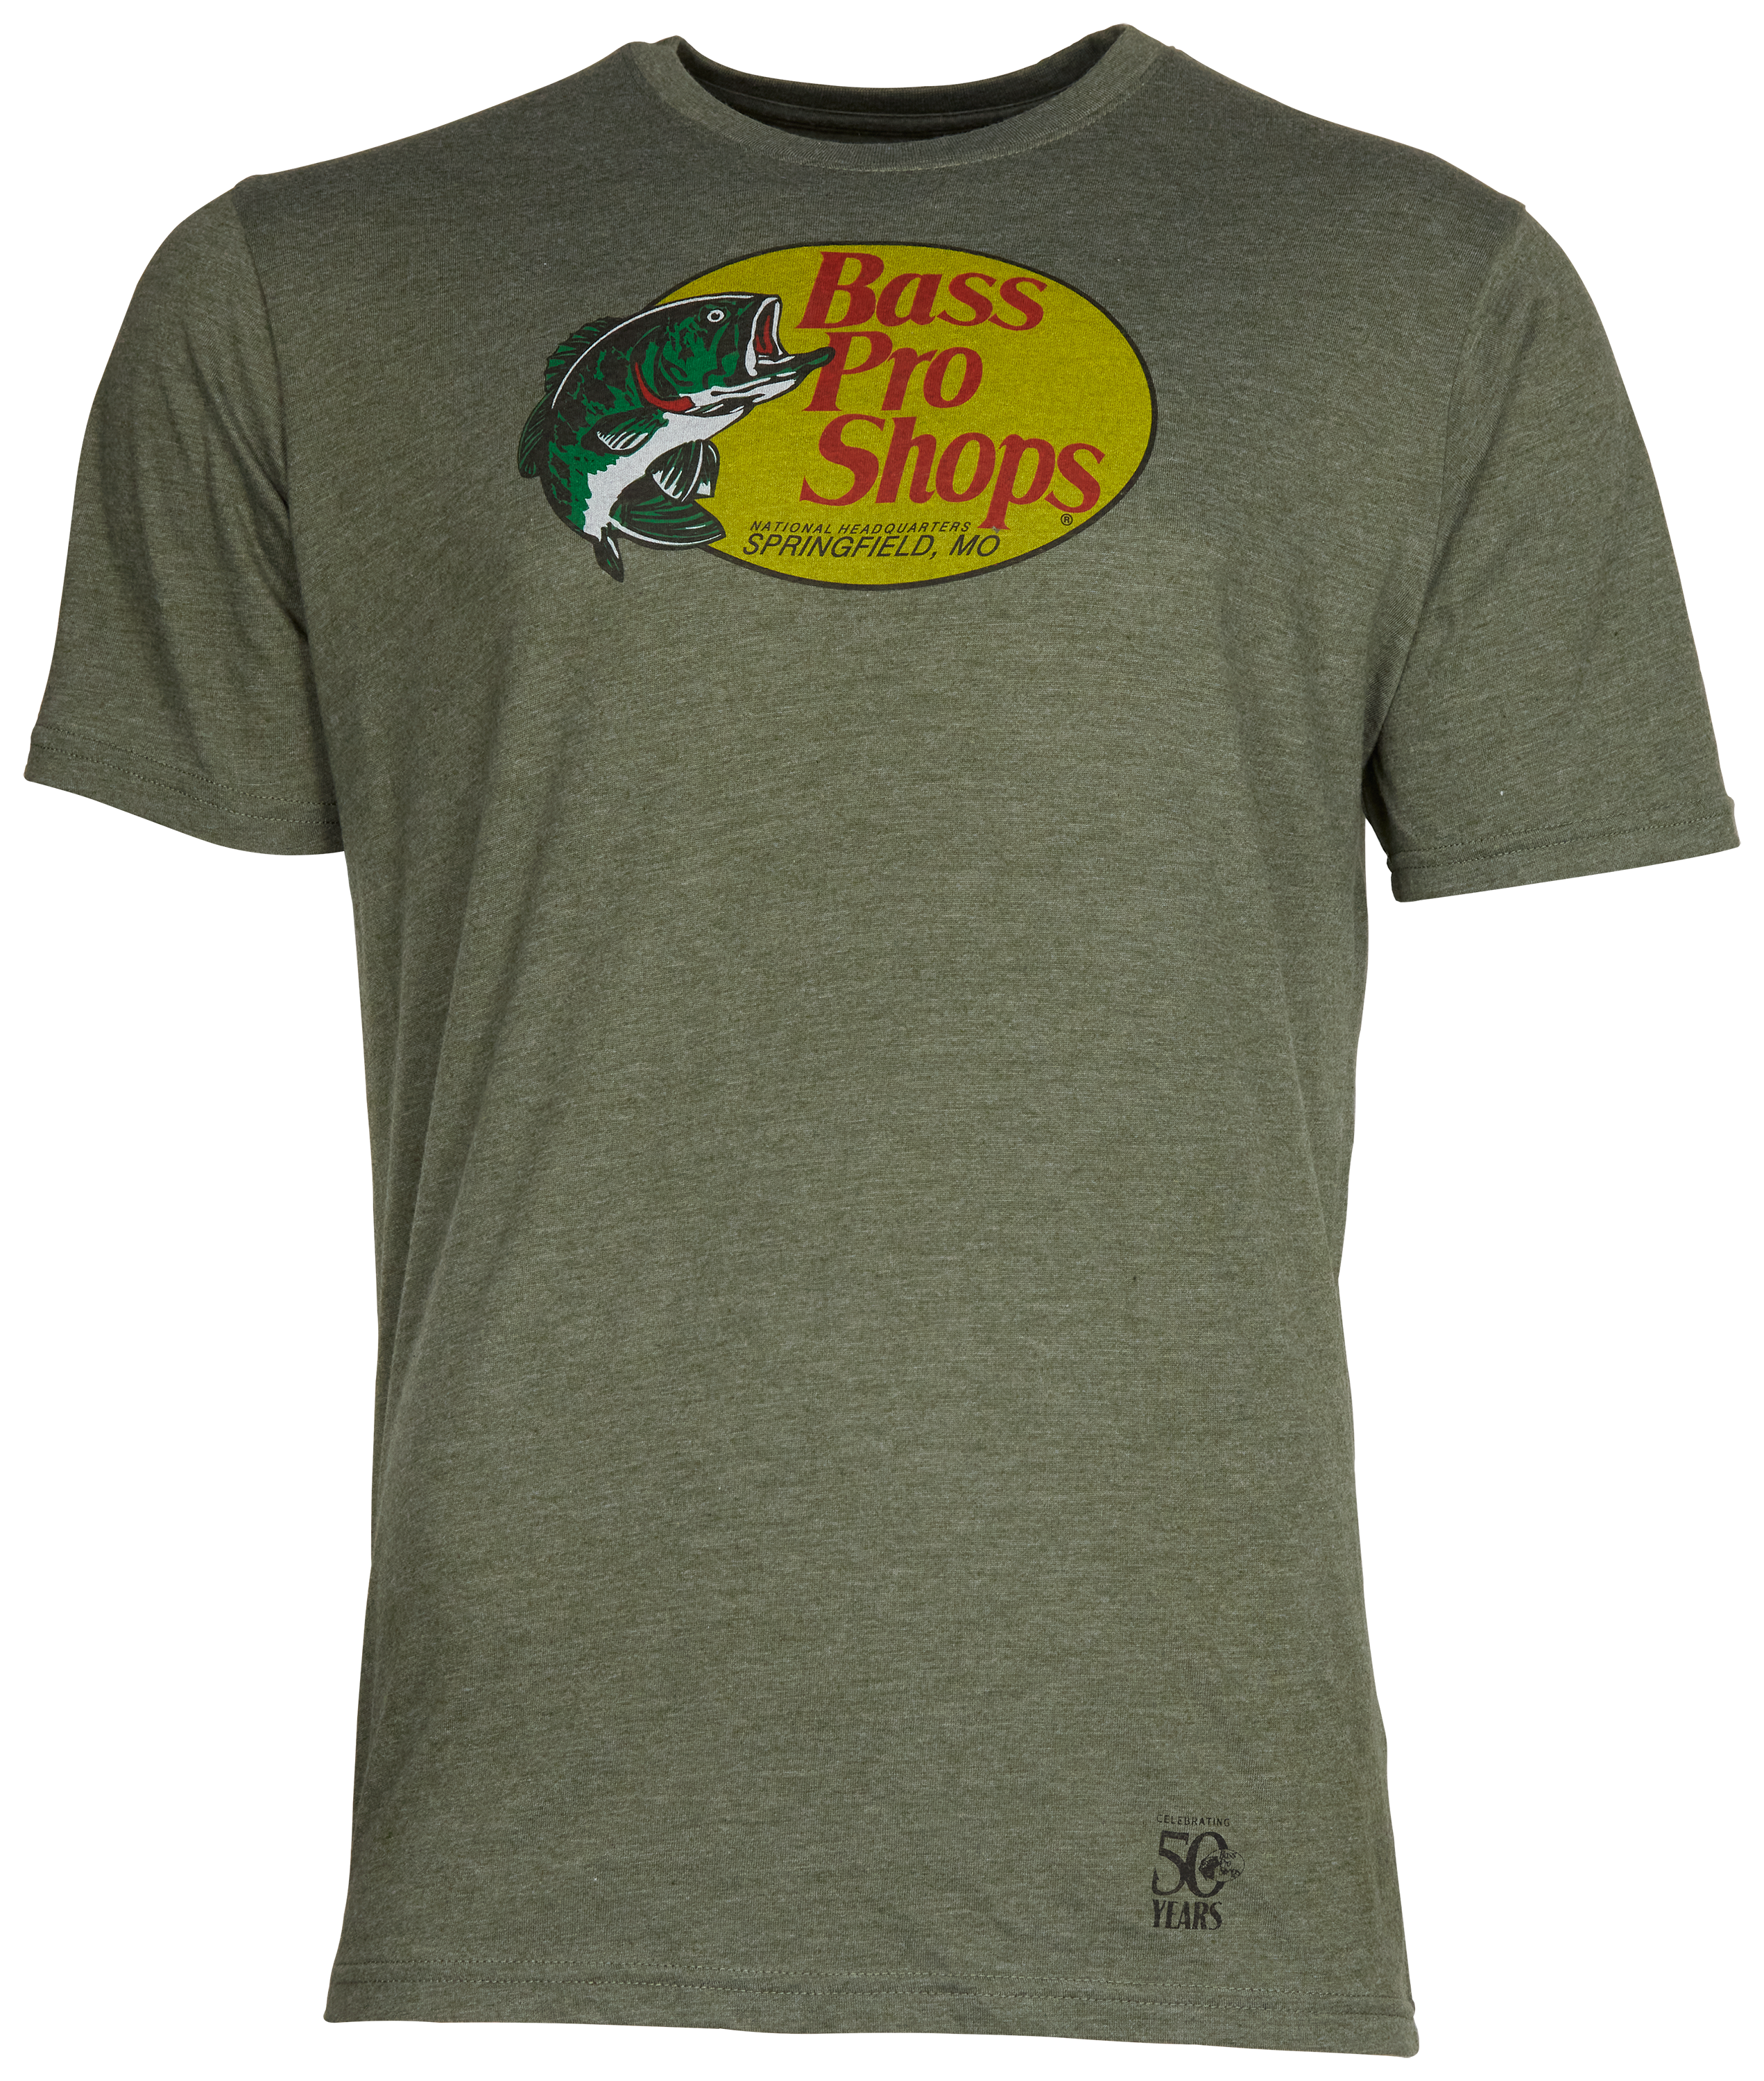 Bass Pro Shops 50th Anniversary Vintage Woodcut Short-Sleeve T-Shirt for Men - Navy Heather - 3XL